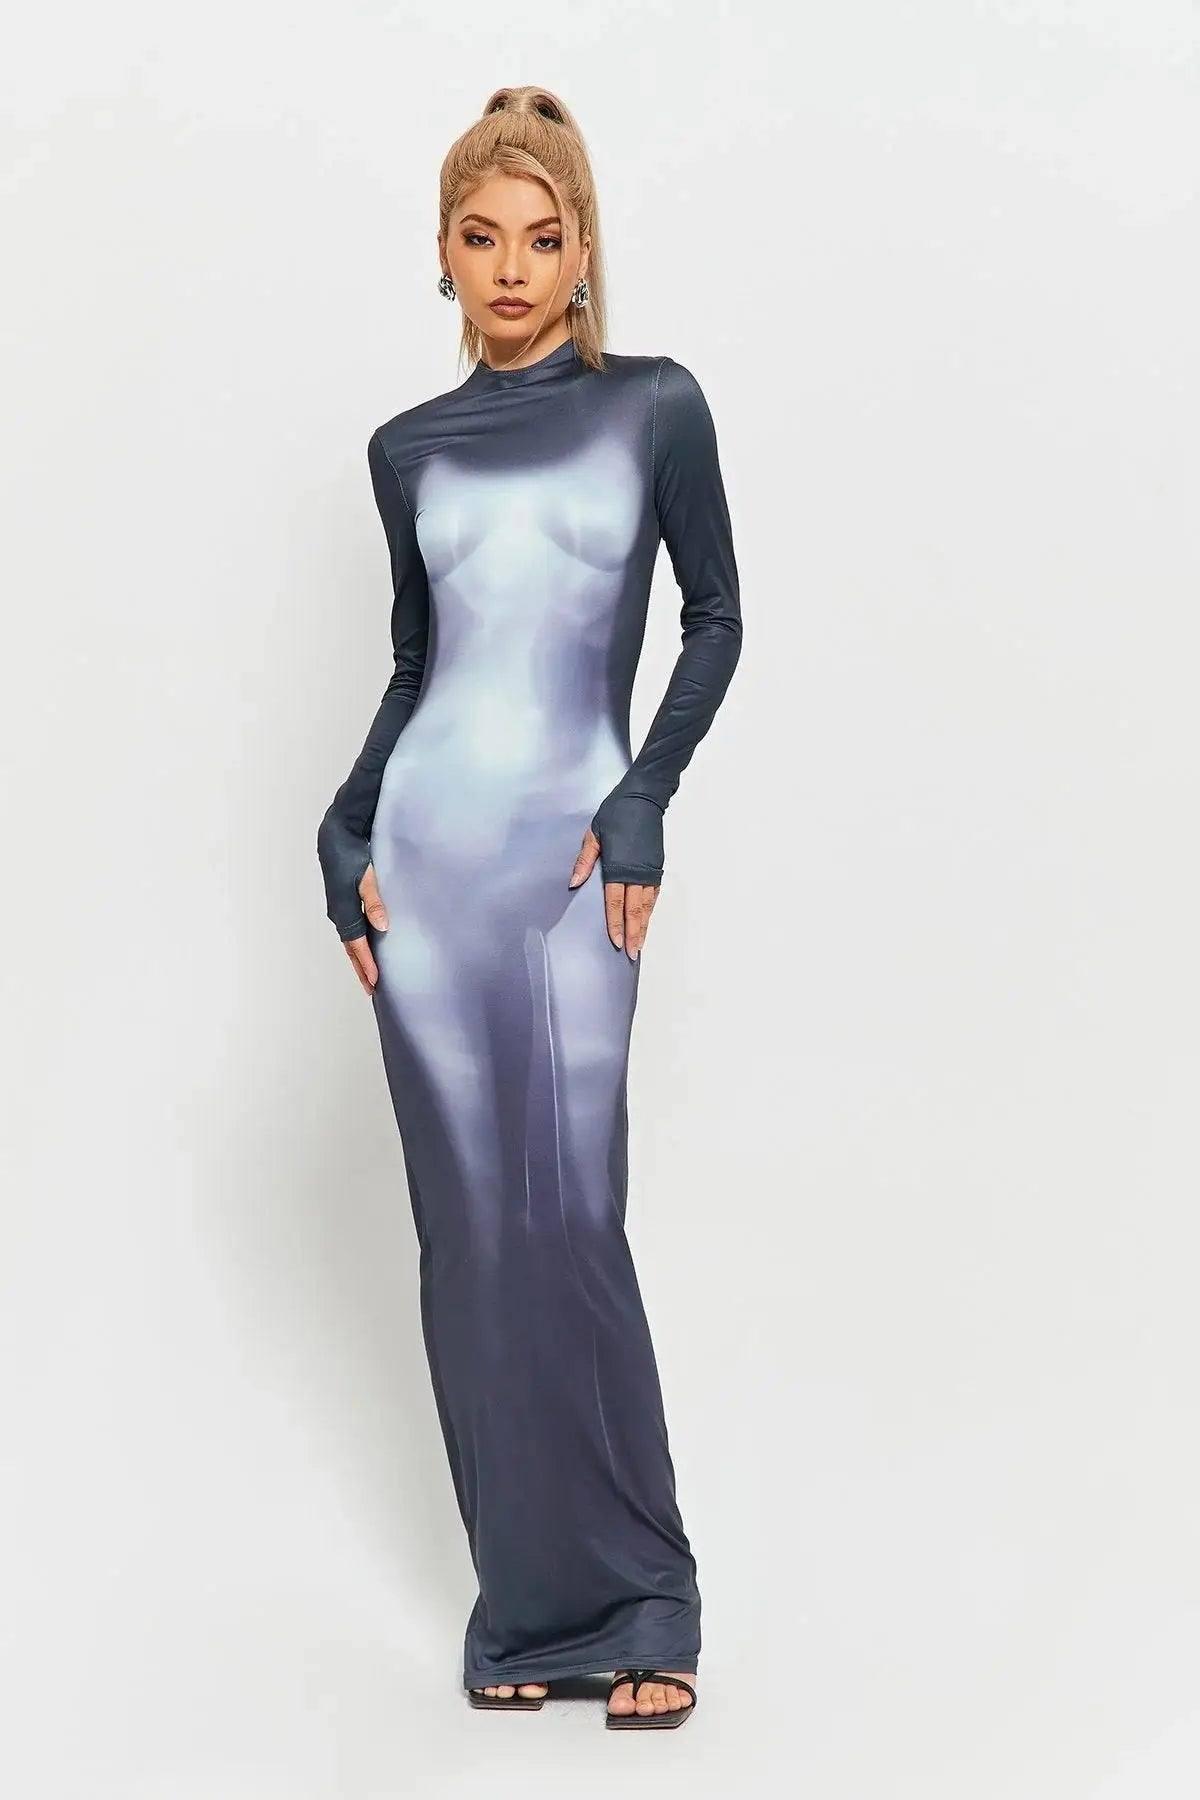 3D Body Printing Super Long Sleeve Body Robe Party Dress-Blue-5